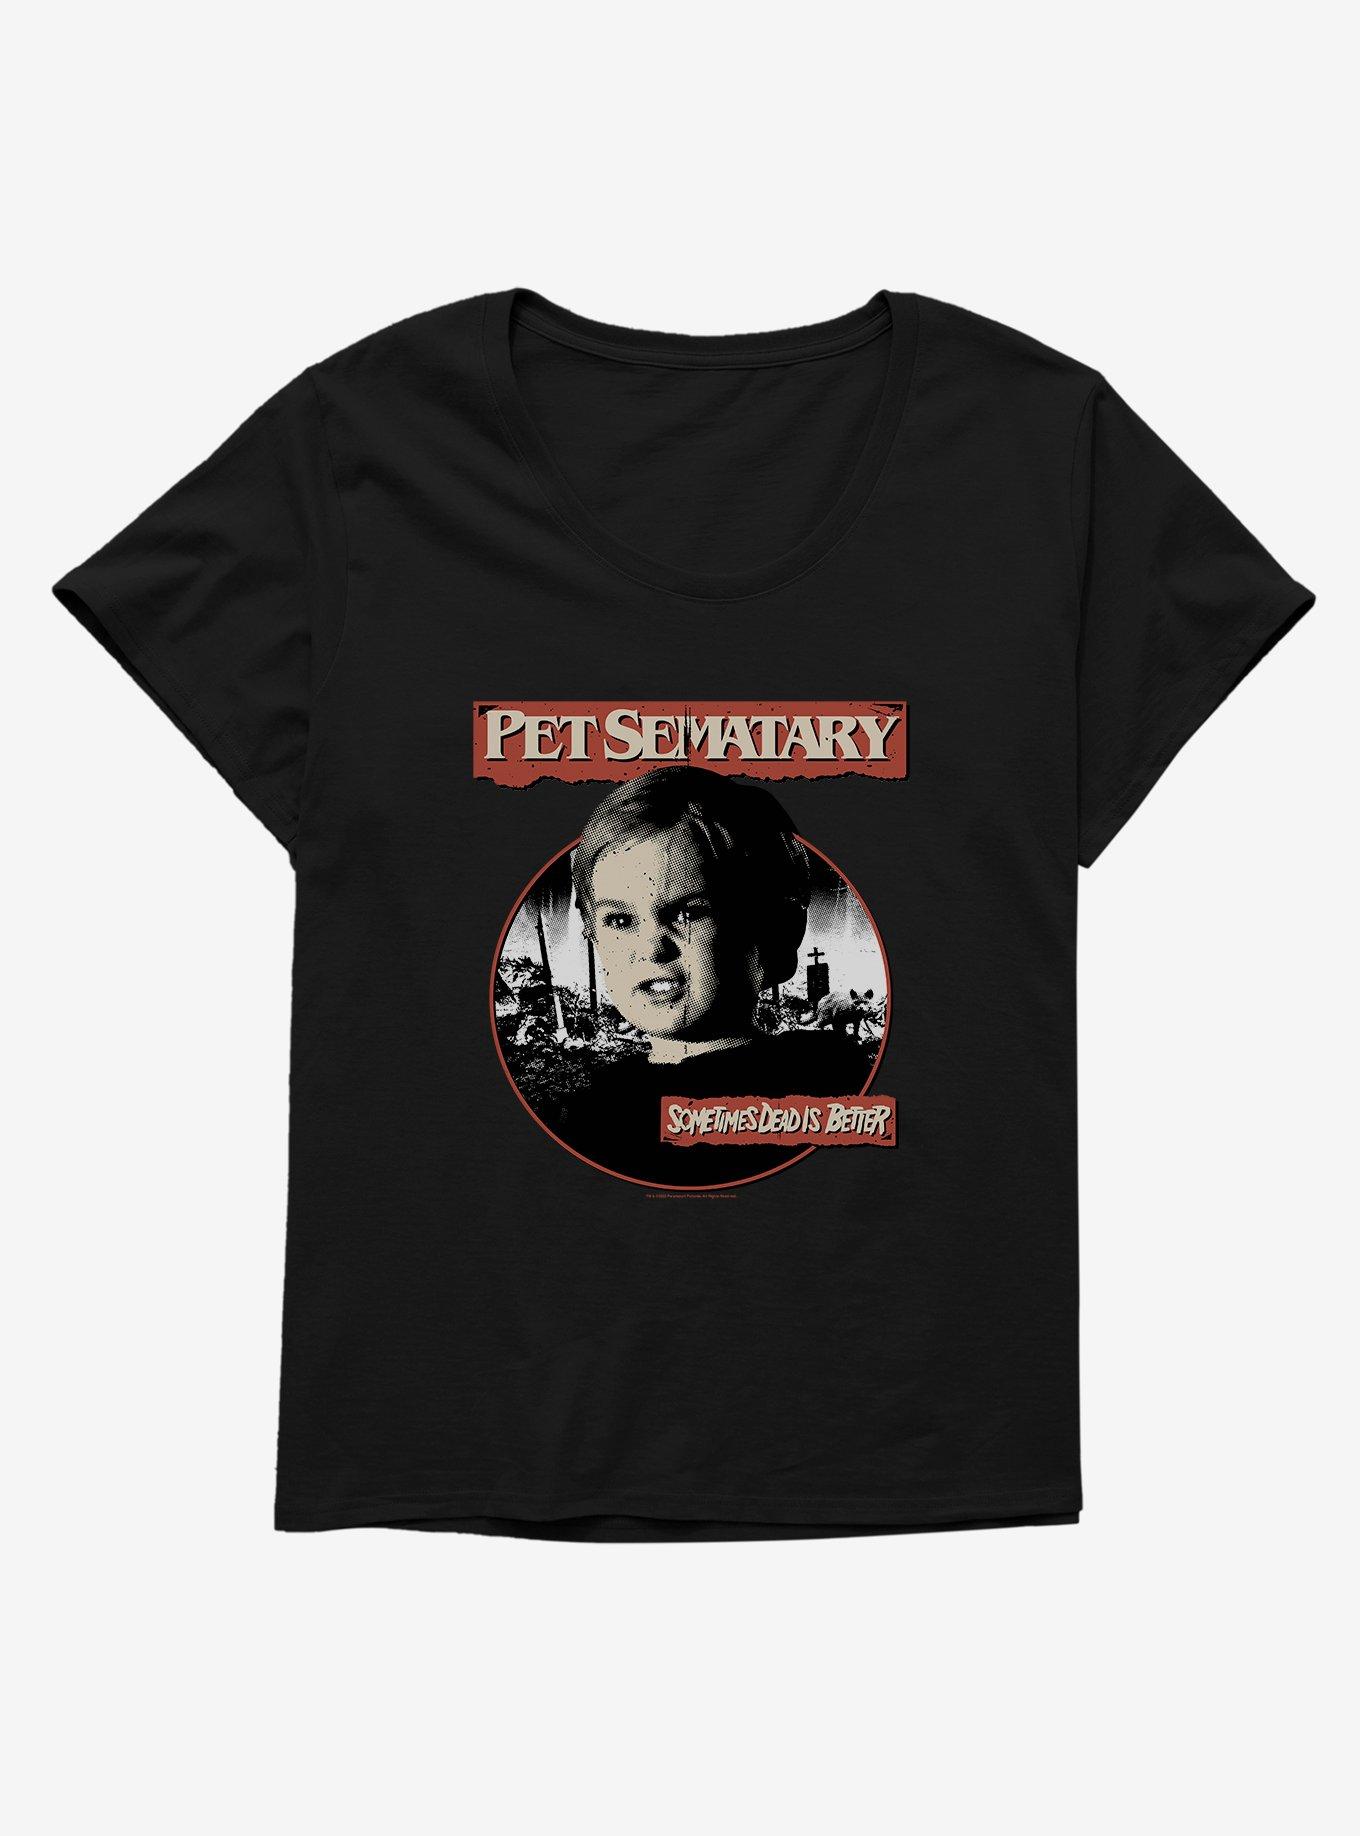 Pet Sematary Gage Creed Girls T-Shirt Plus